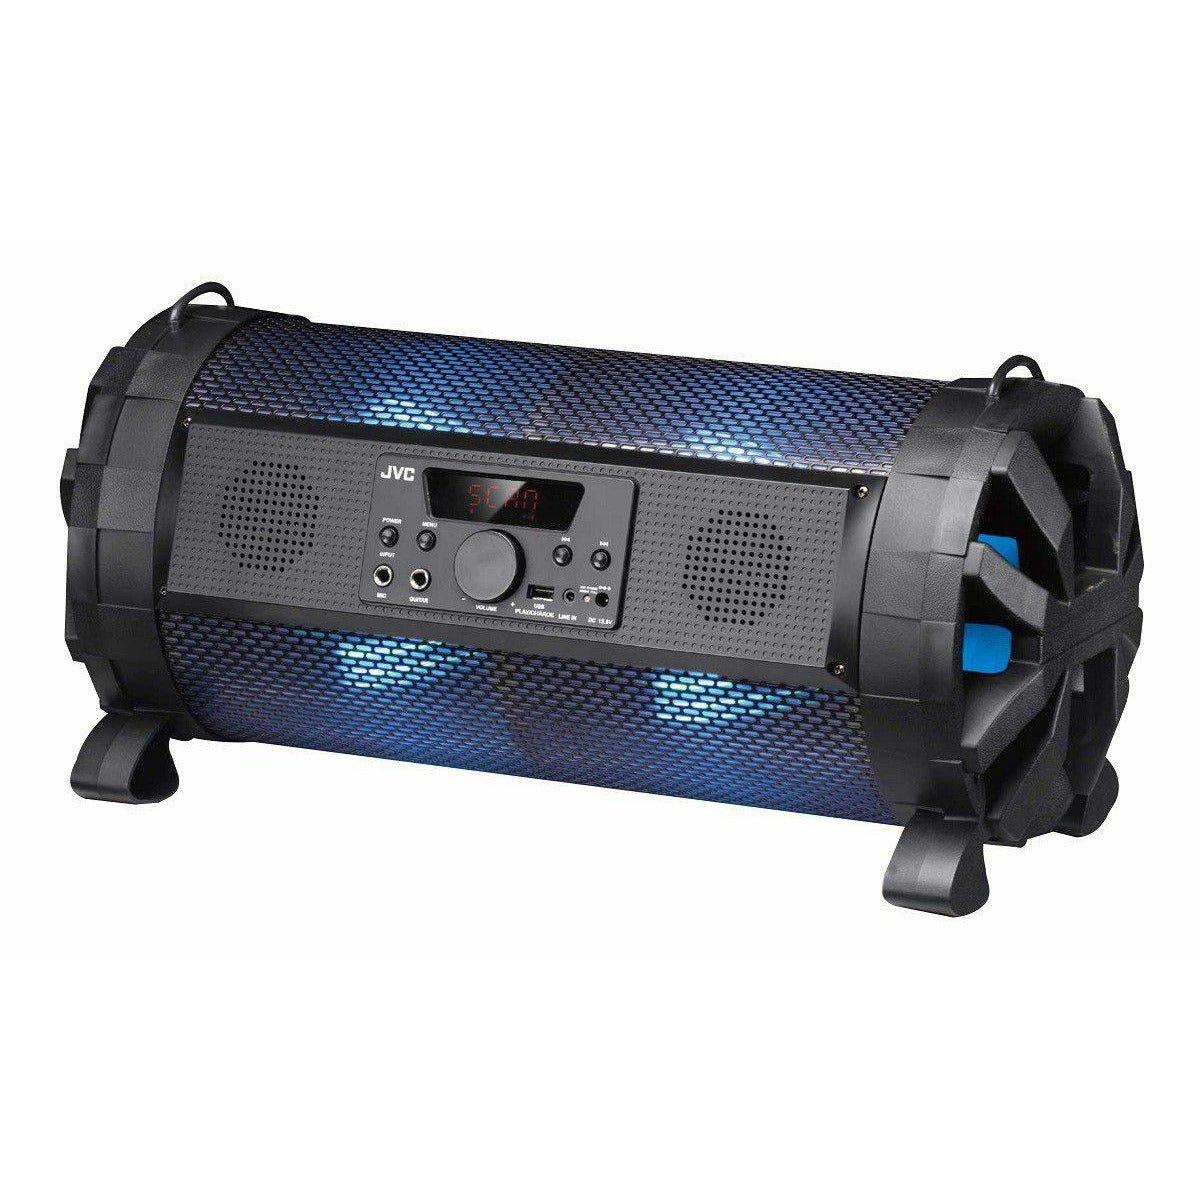 Portable Bluetooth Speaker with FM Radio - JVC TV